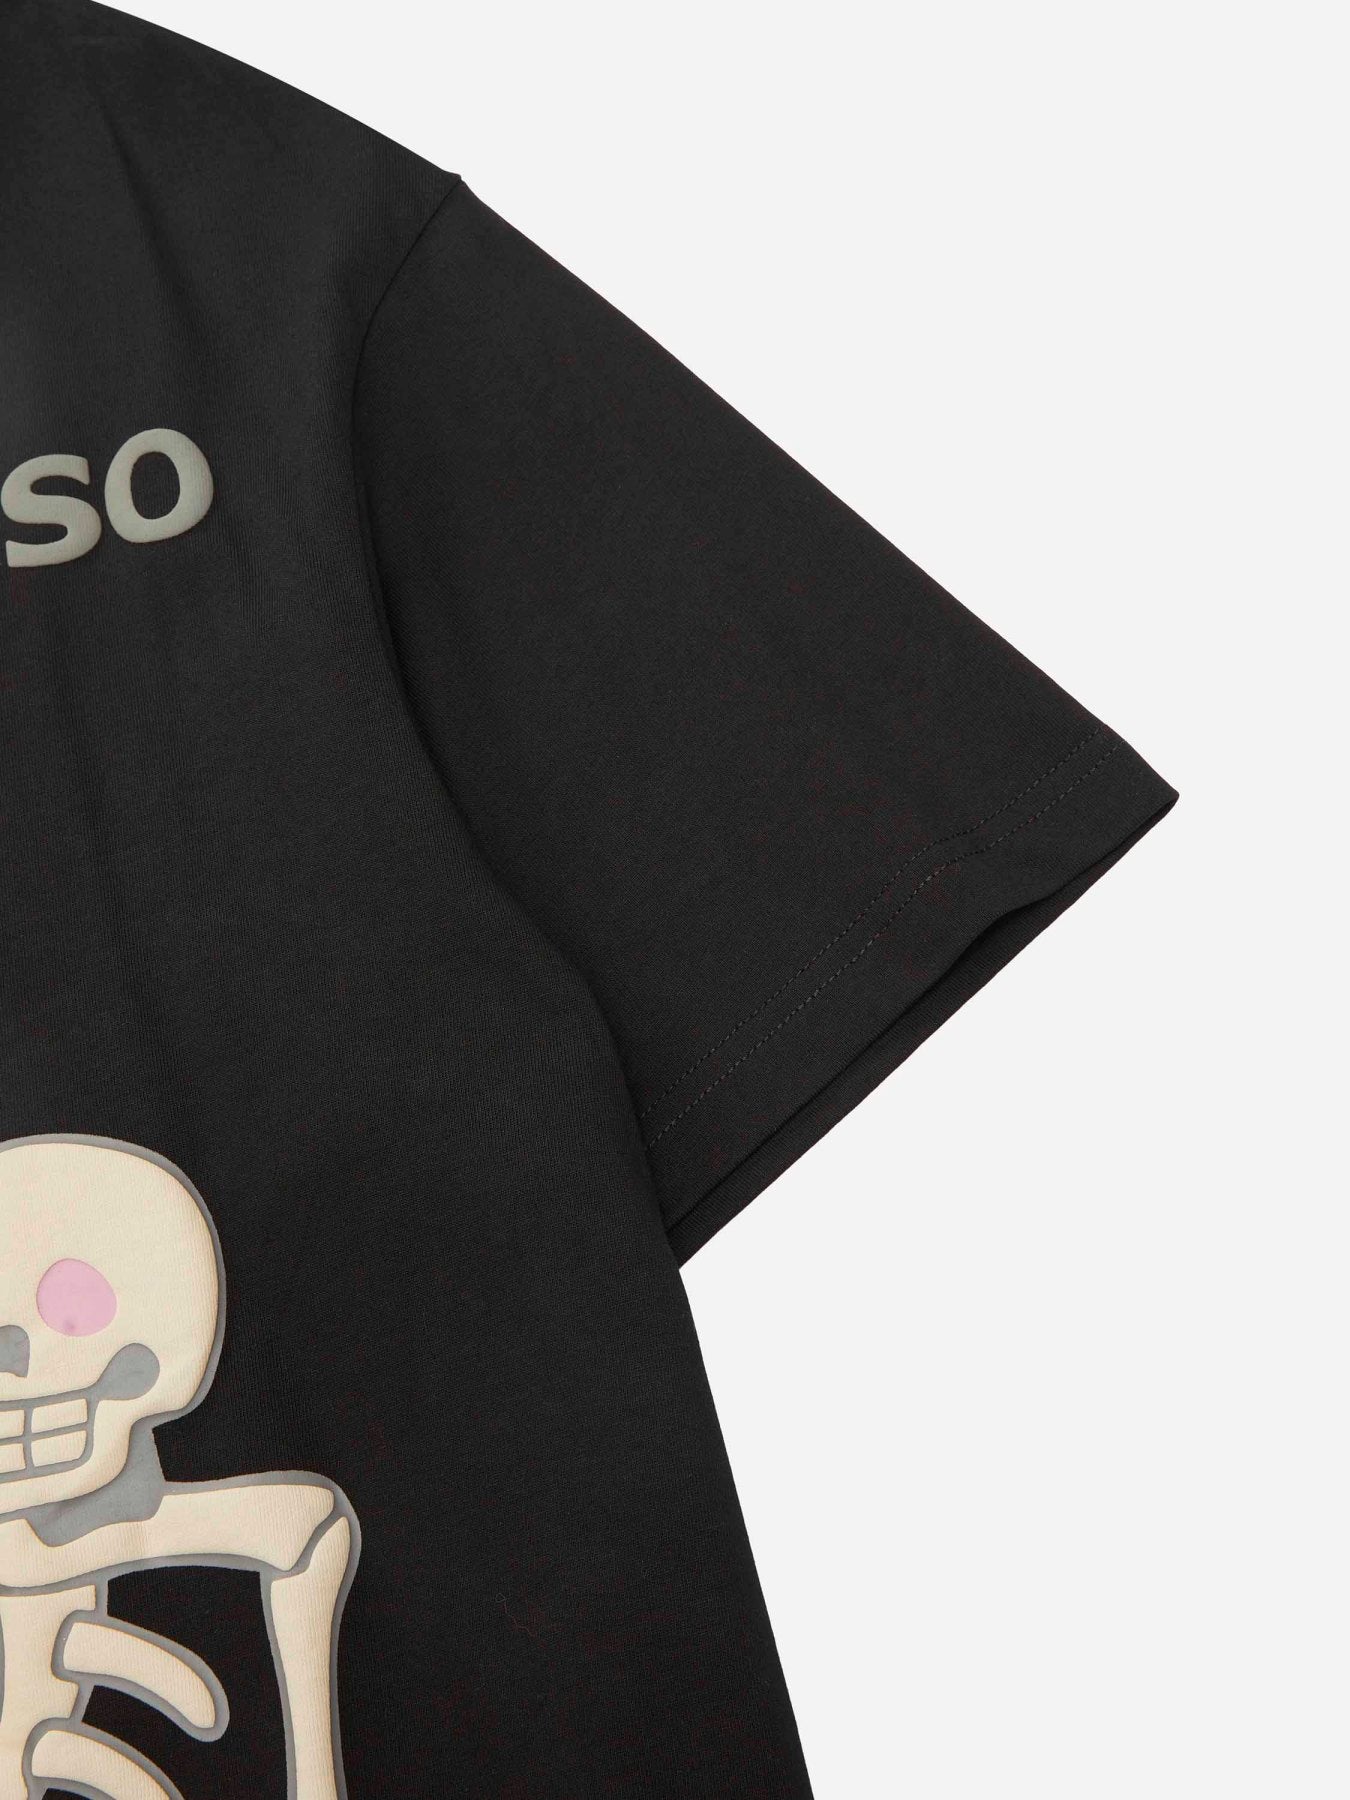 Thesupermade Skull Print T-Shirt